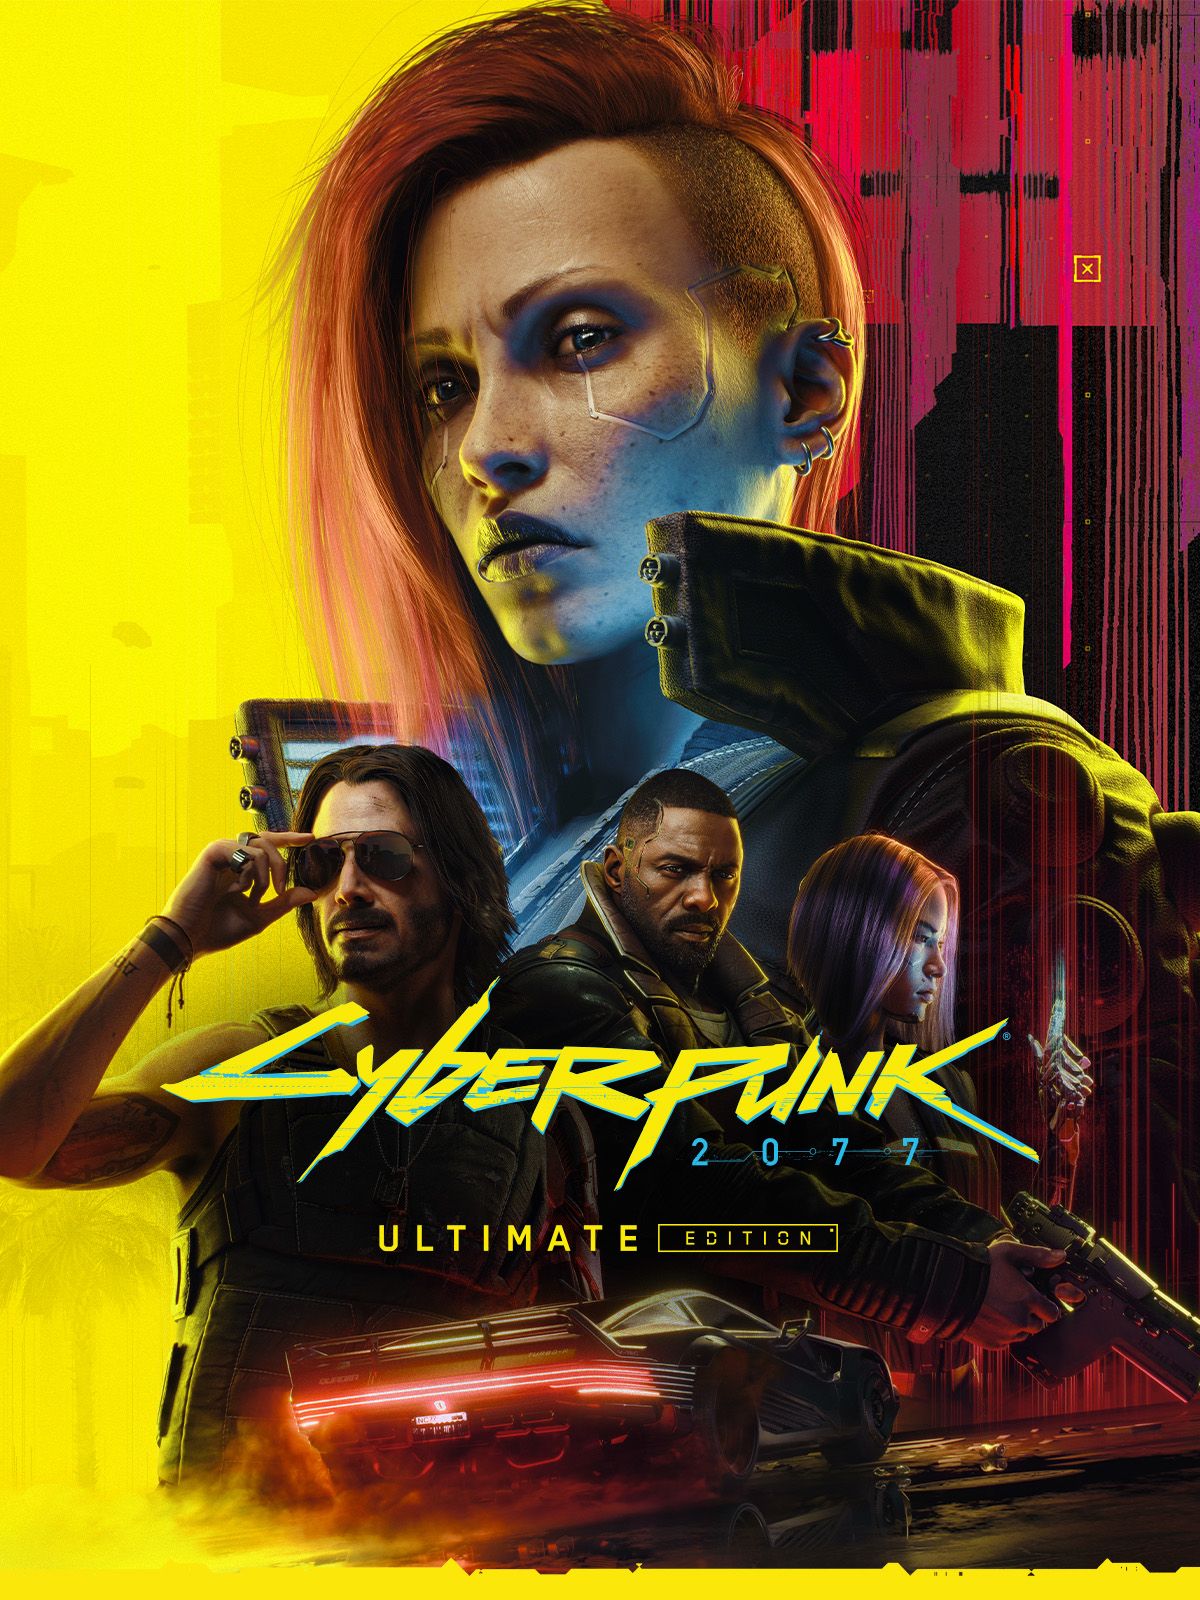 Cyberpunk 2077 Ultimate Edition (PC) | Ultimate Edition - GOG.com Key - GLOBAL